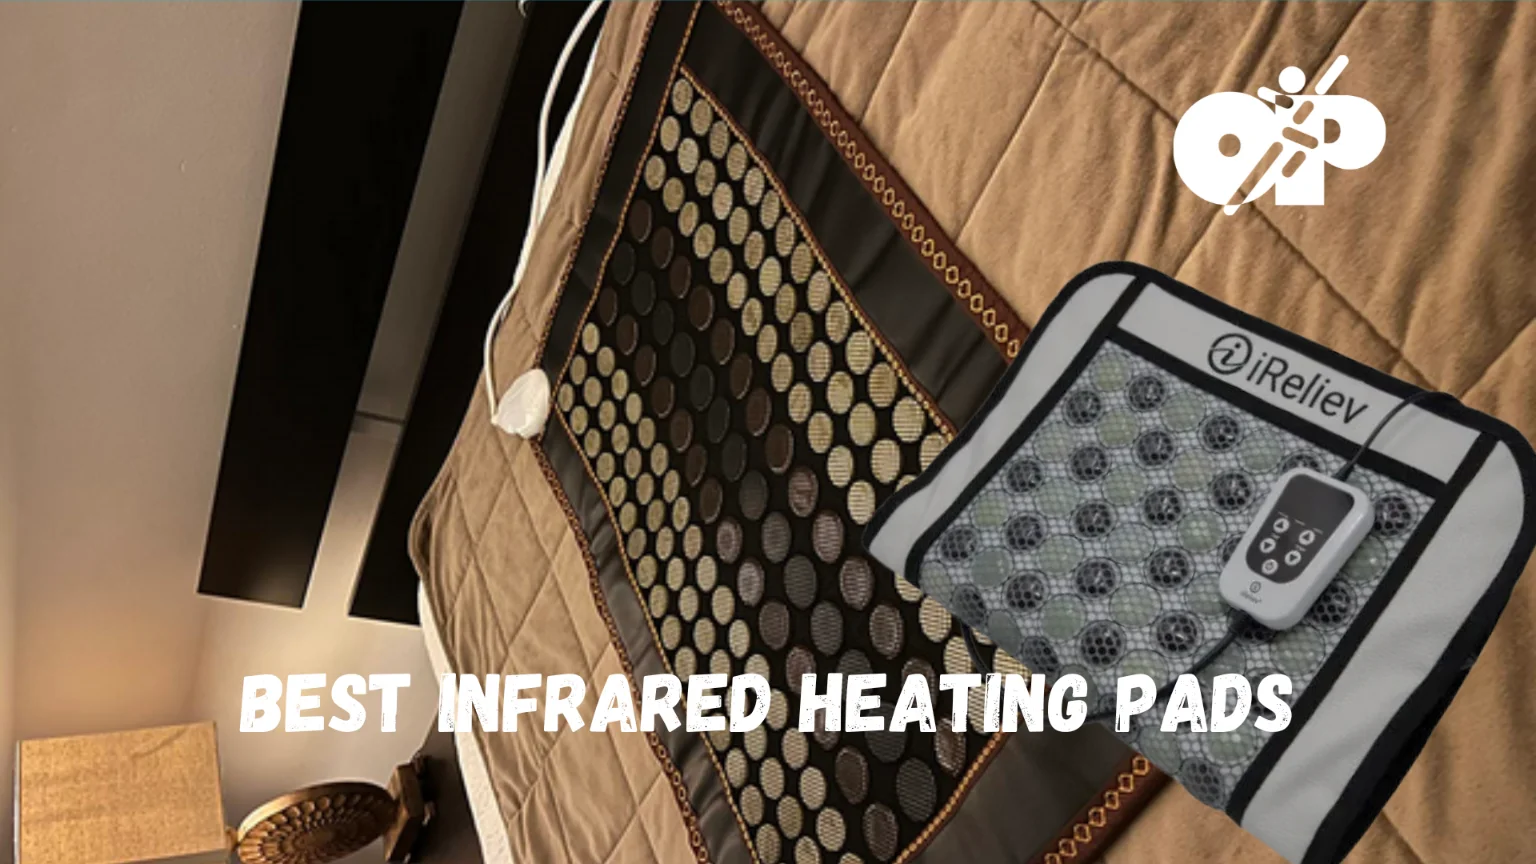 Infrared heating pads - Main